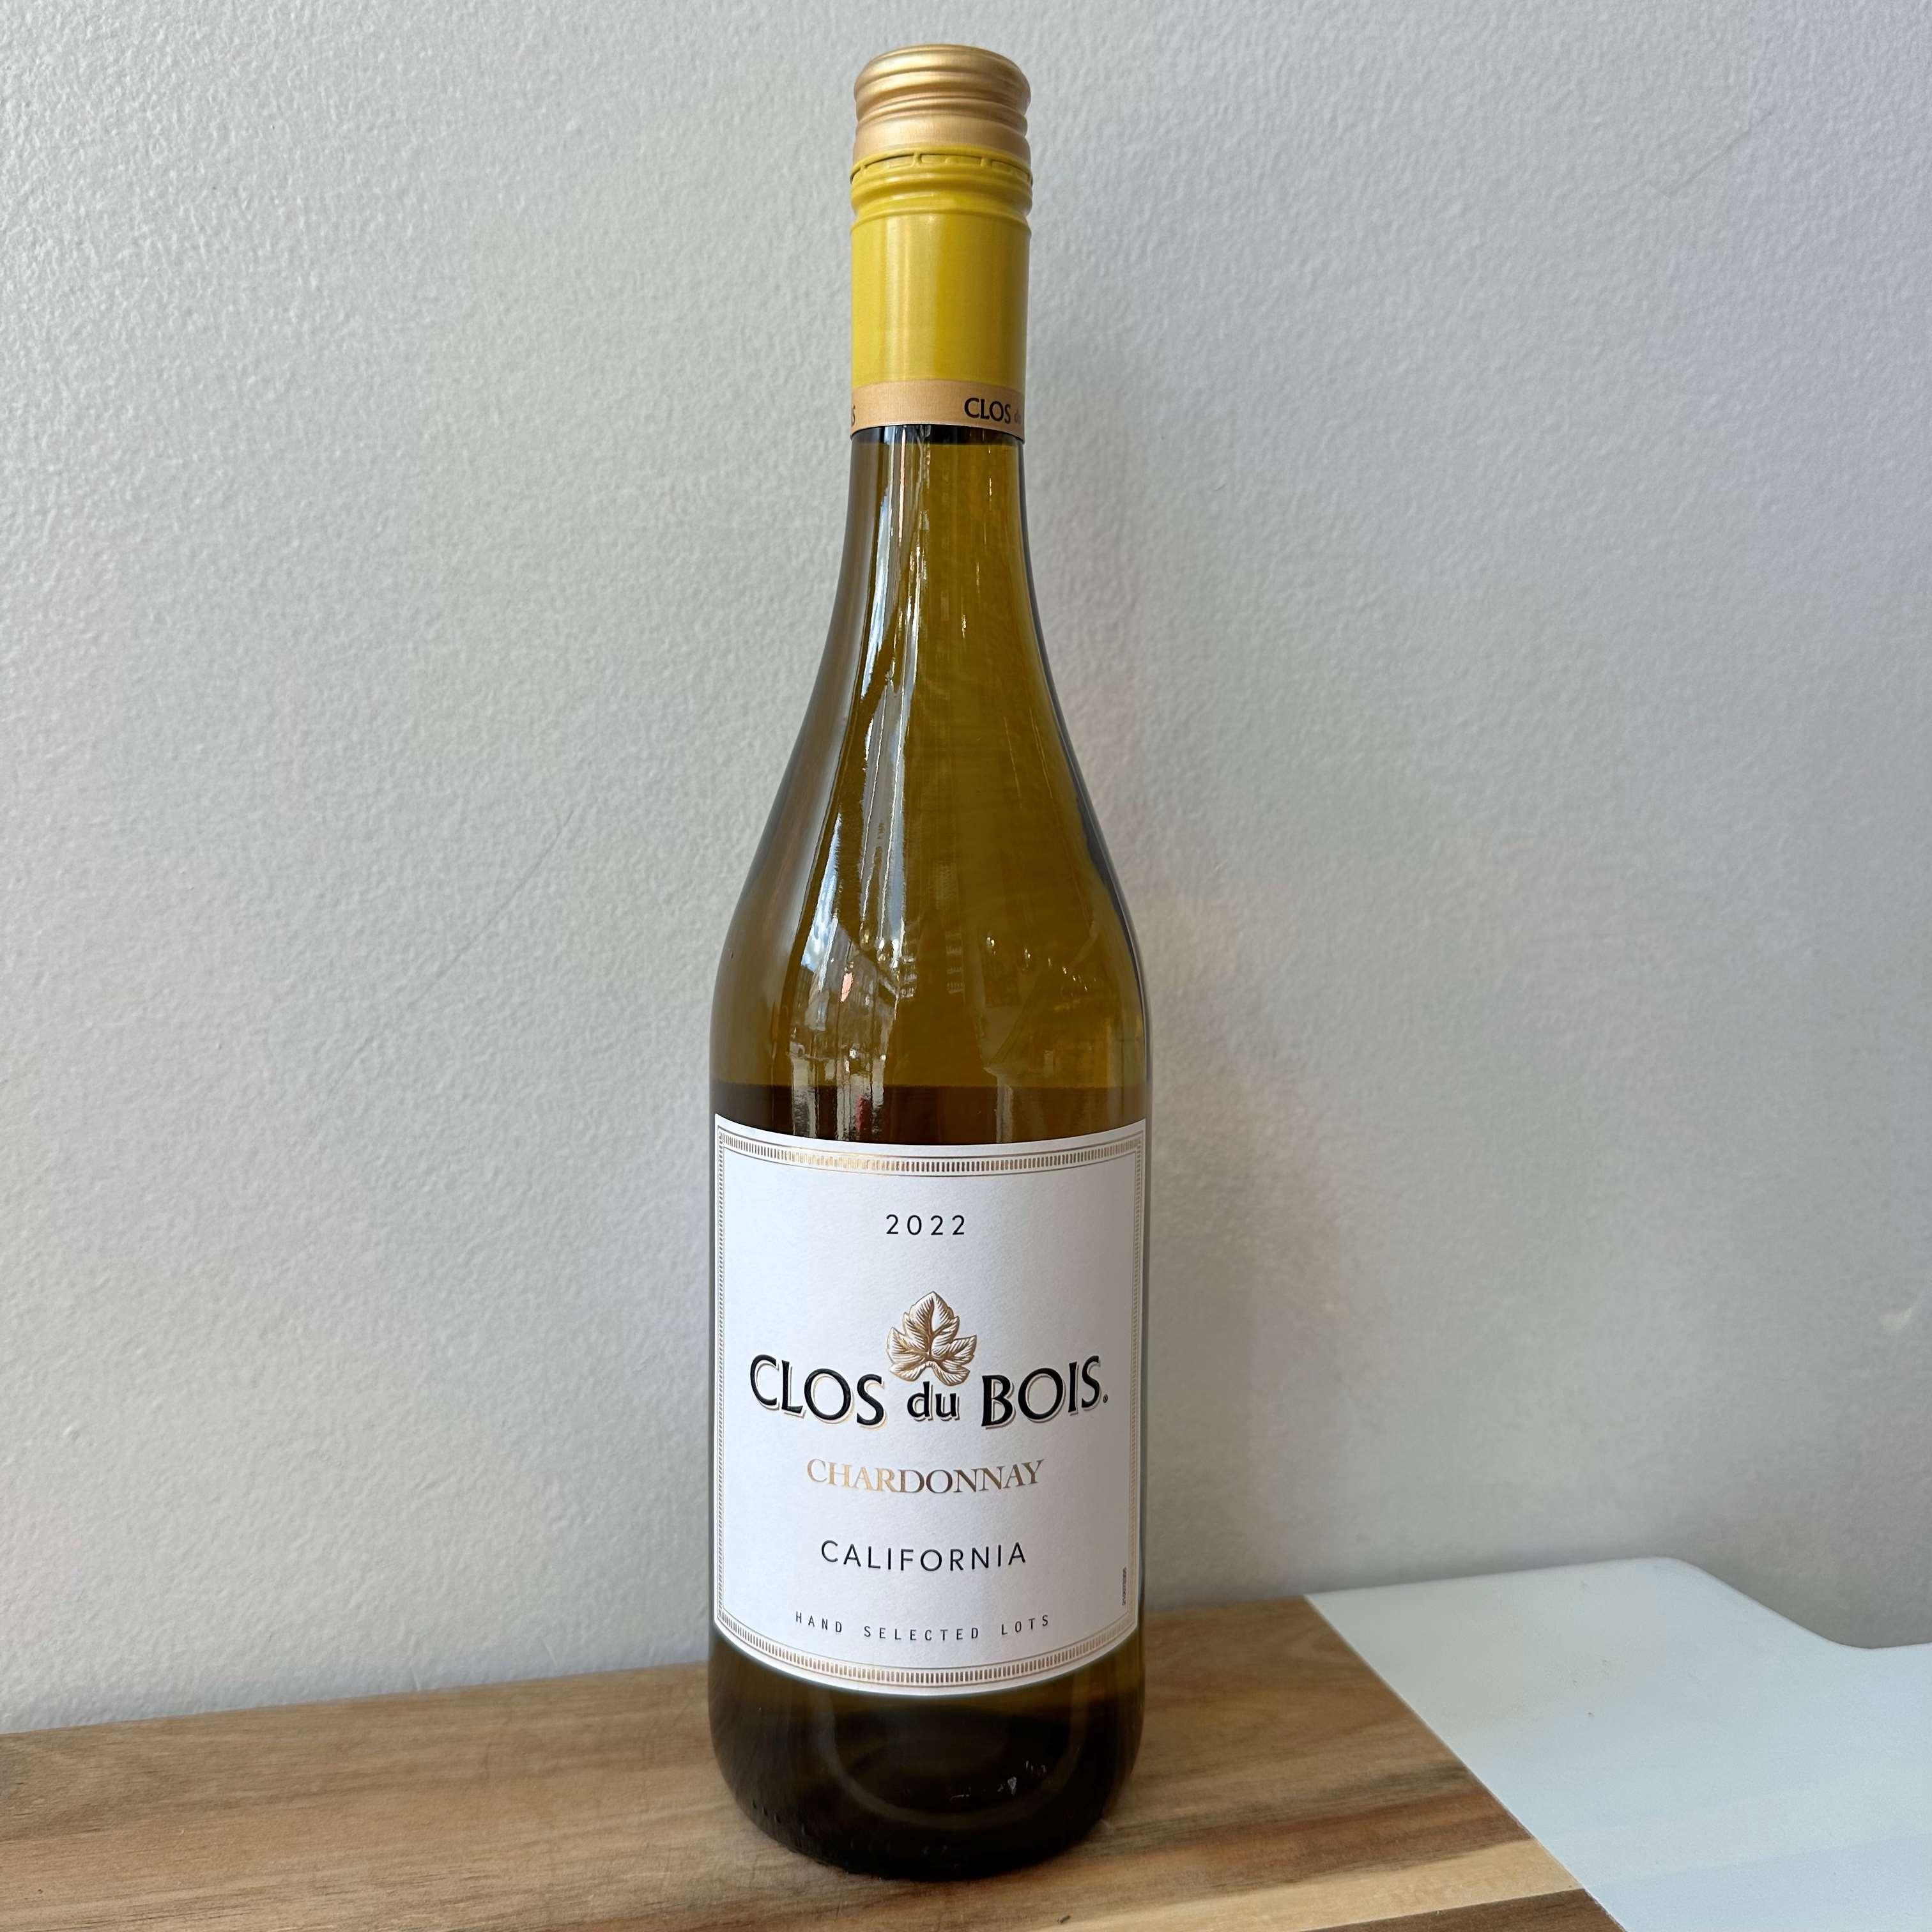 Clos du Bois Chardonnay 2022 California